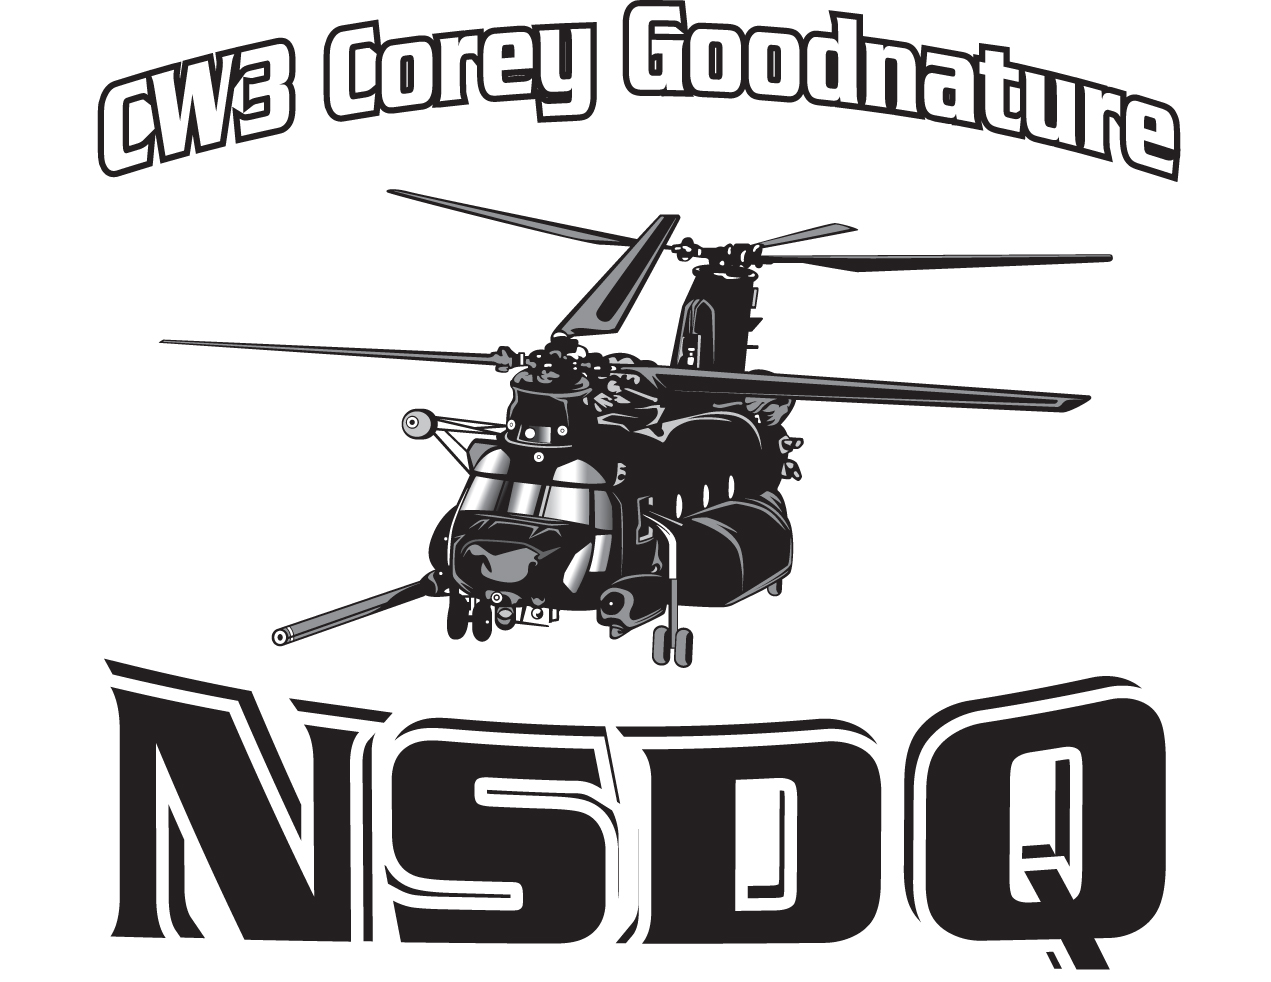 CW3 Corey Goodnature NSDQ